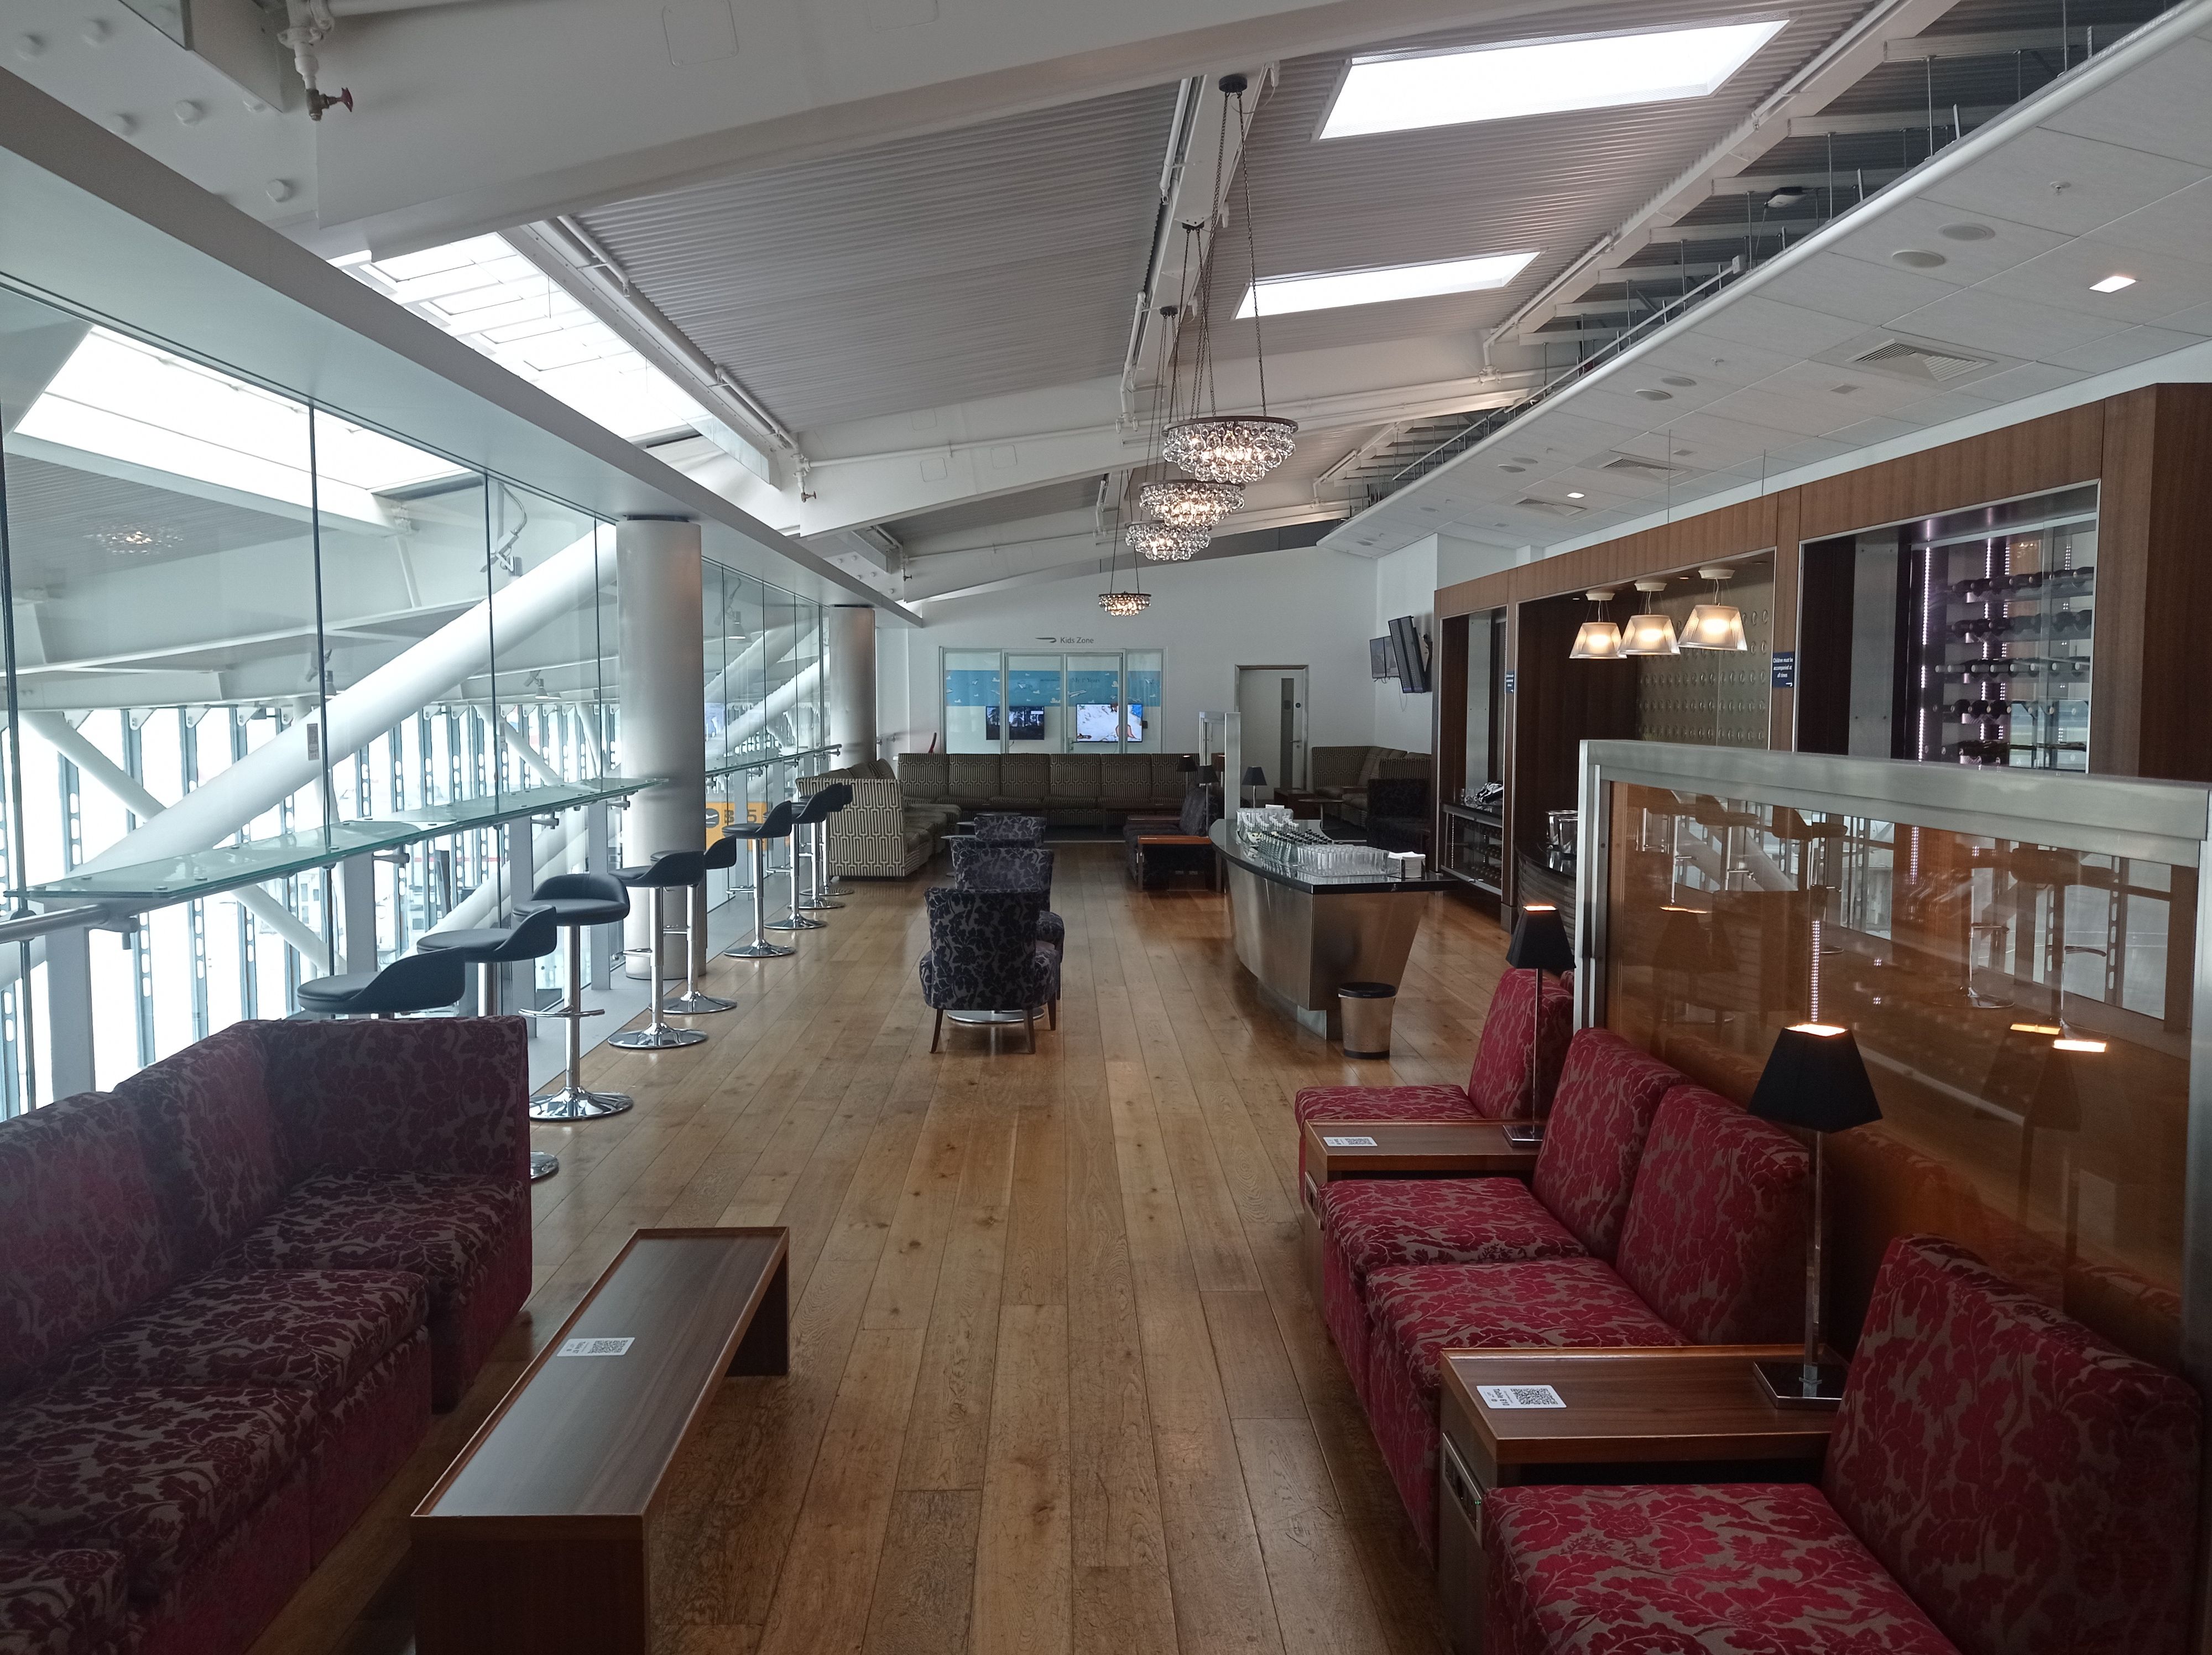 BA lounge at Heathrow T5B